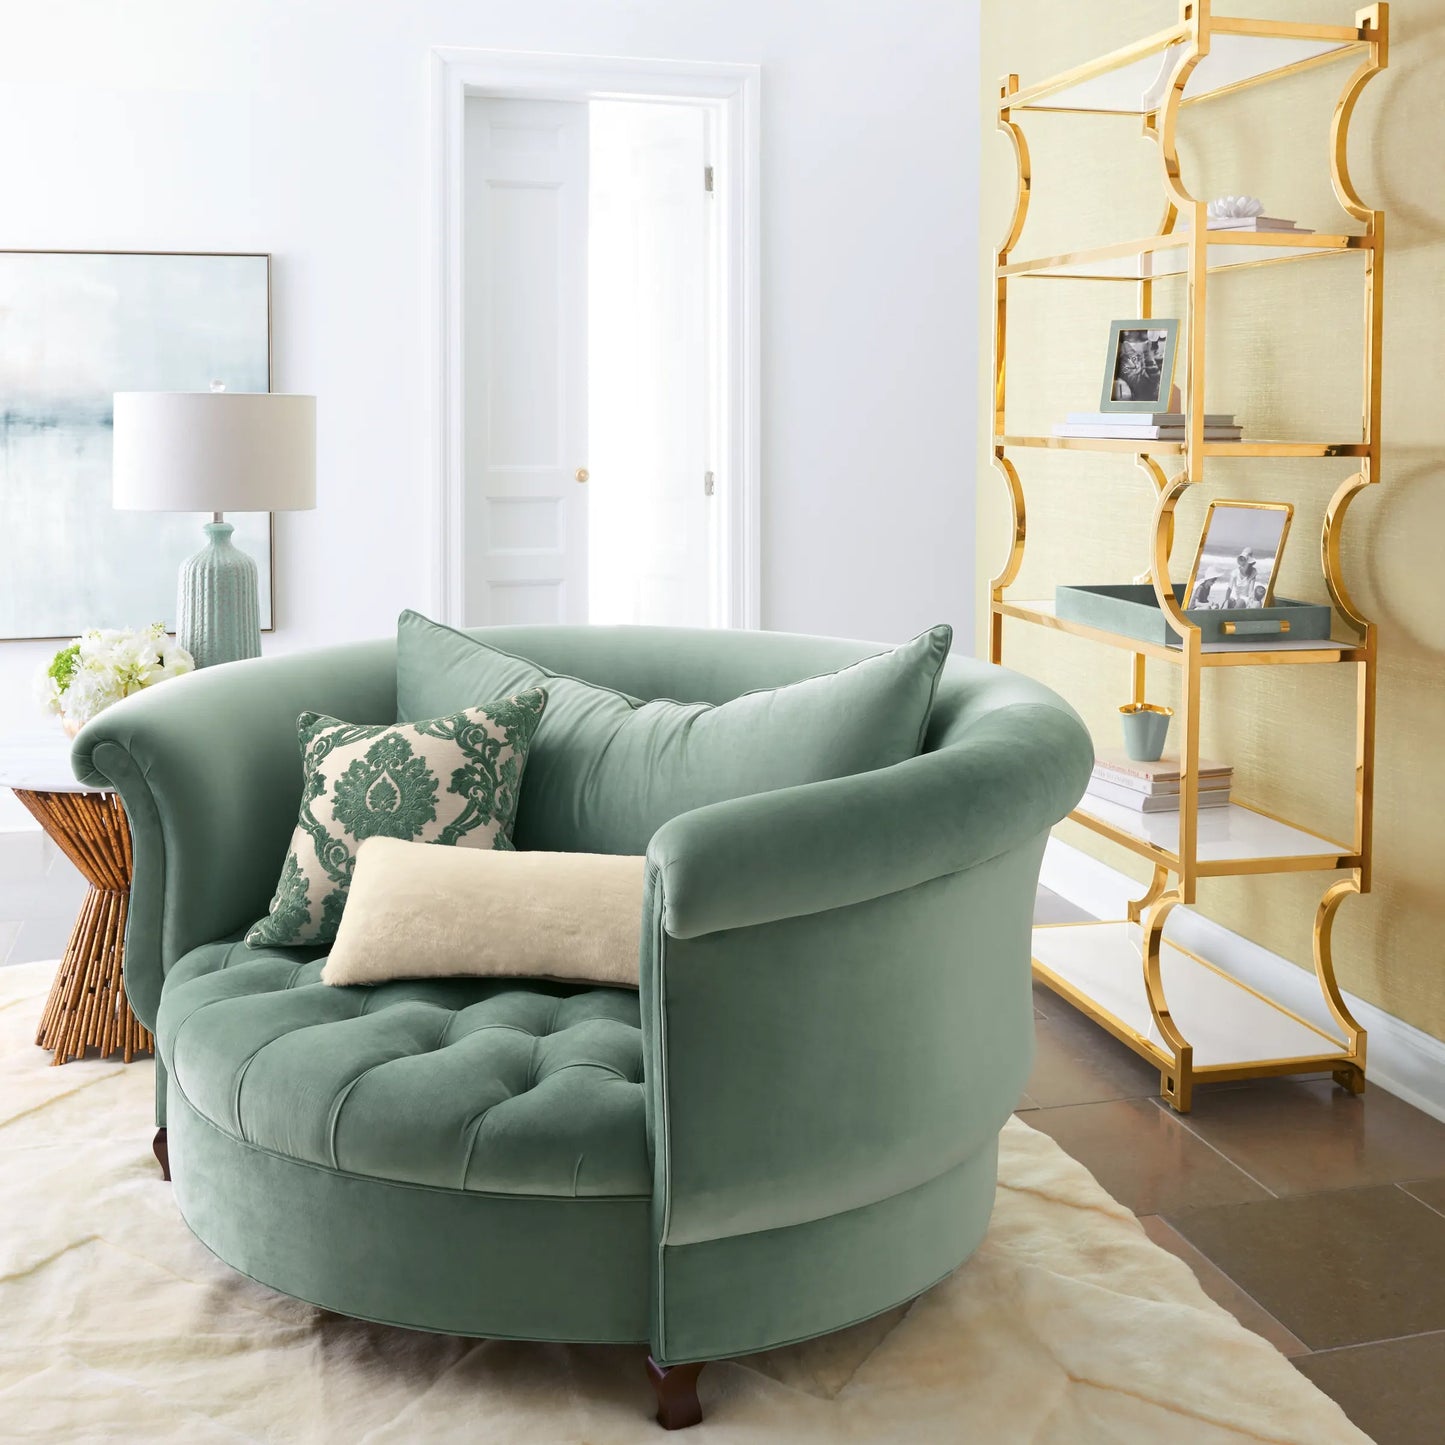 Harlow Sage Cuddle sofa Chair